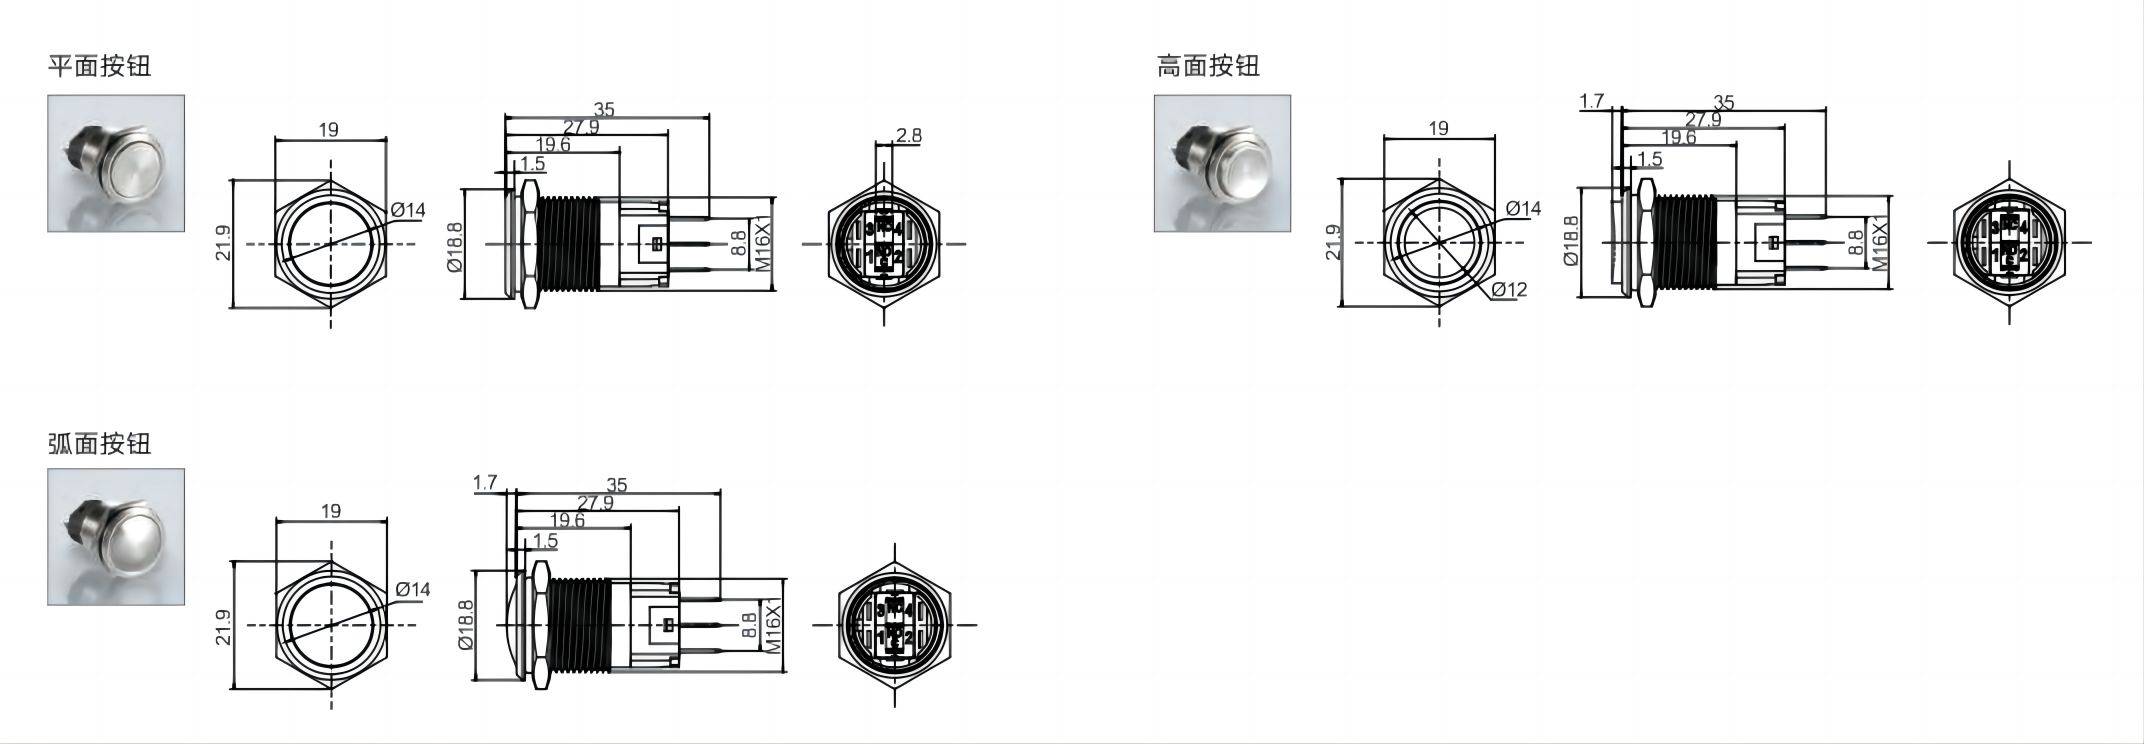 J16 Arc button Product Dimensions